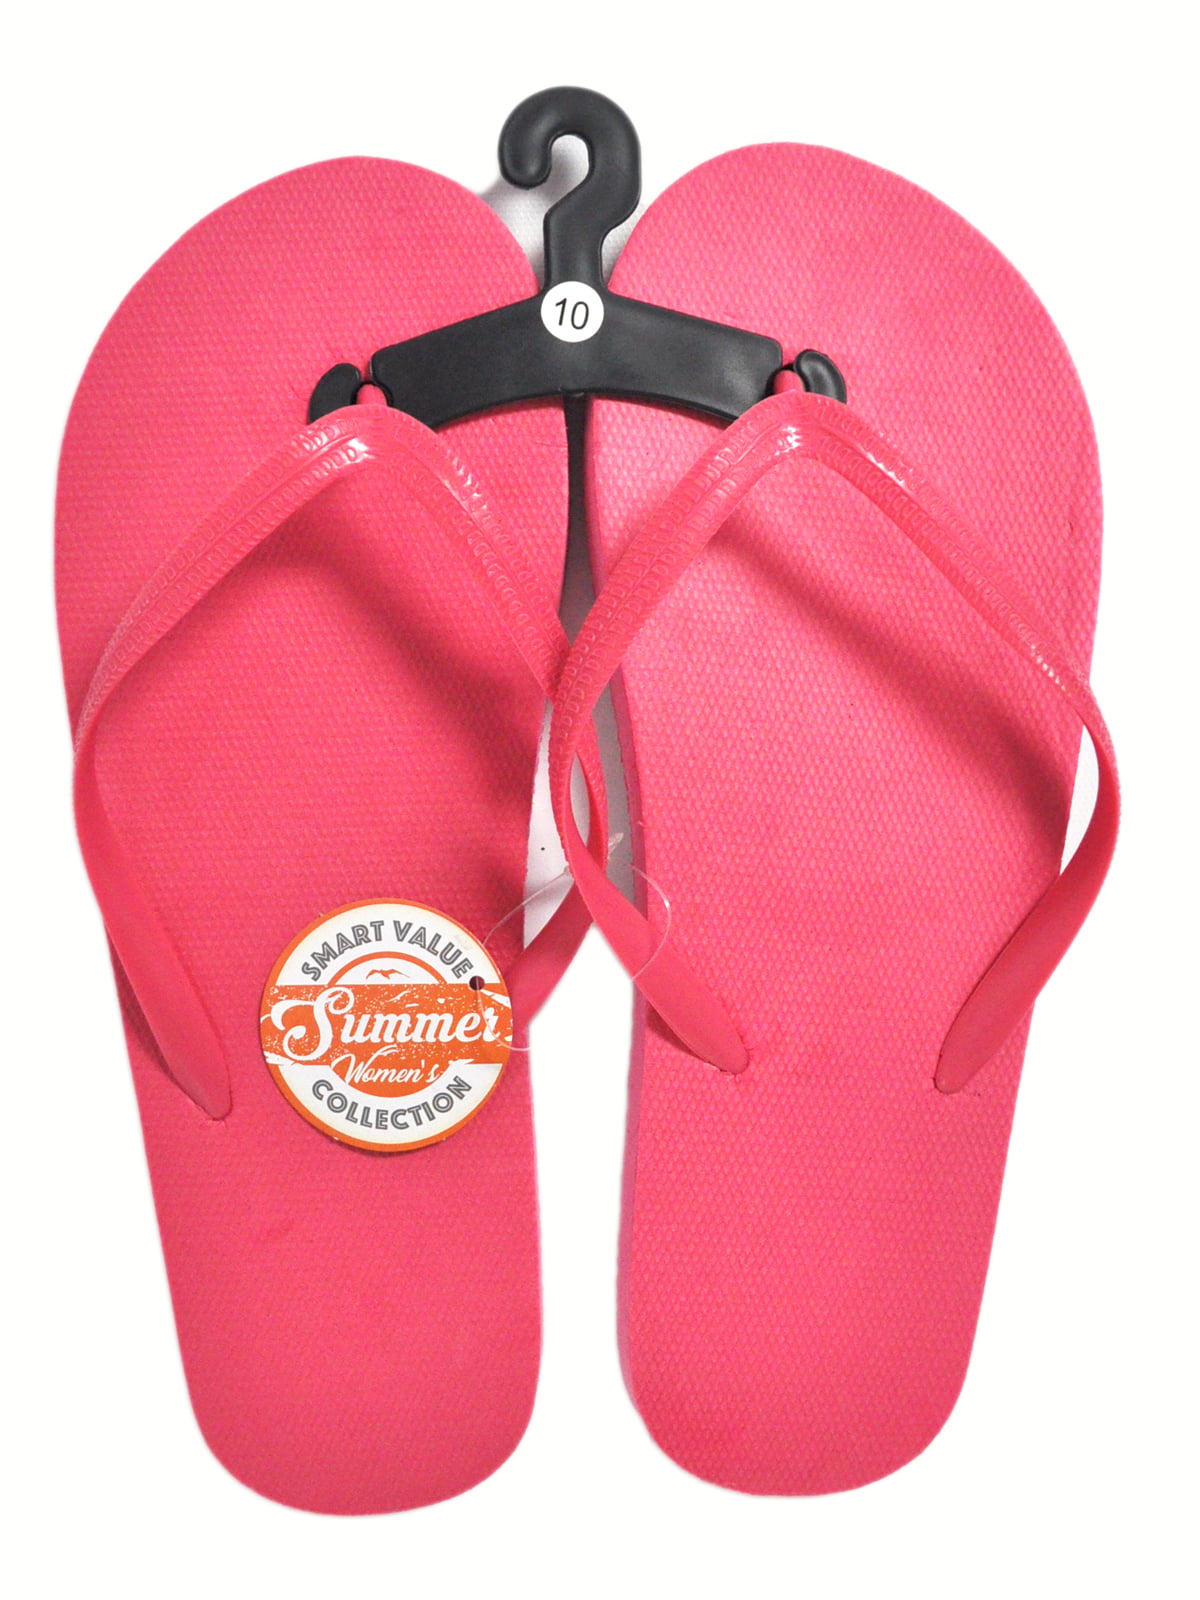 Generic - Womens Flip Flops Size 10 Pink - Walmart.com - Walmart.com